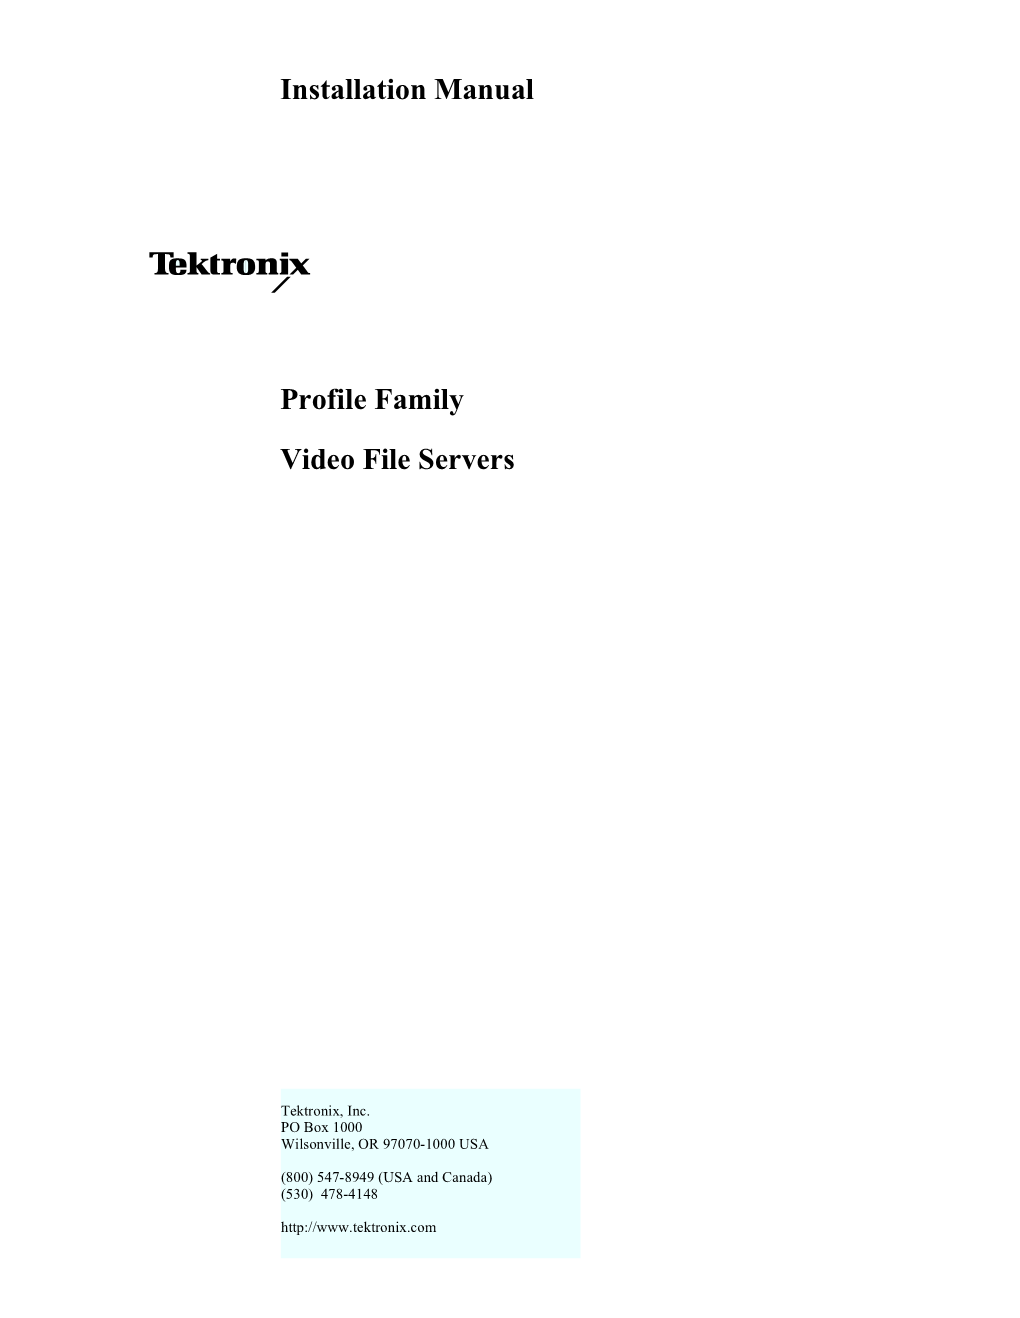 Profile Family Video File Servers